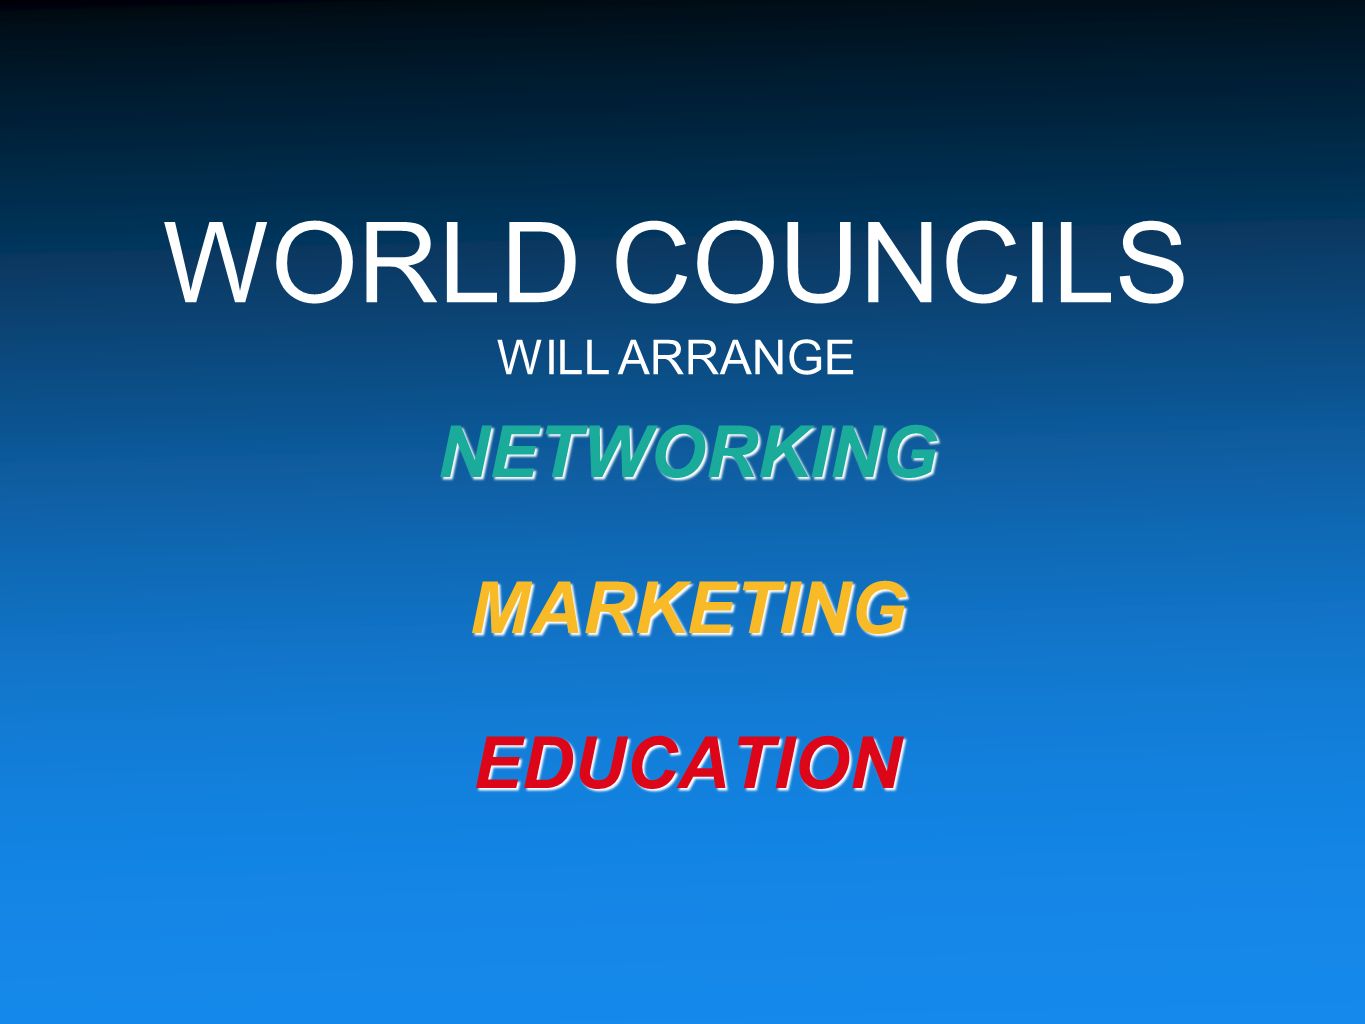 NETWORKINGMARKETINGEDUCATION WORLD COUNCILS WILL ARRANGE